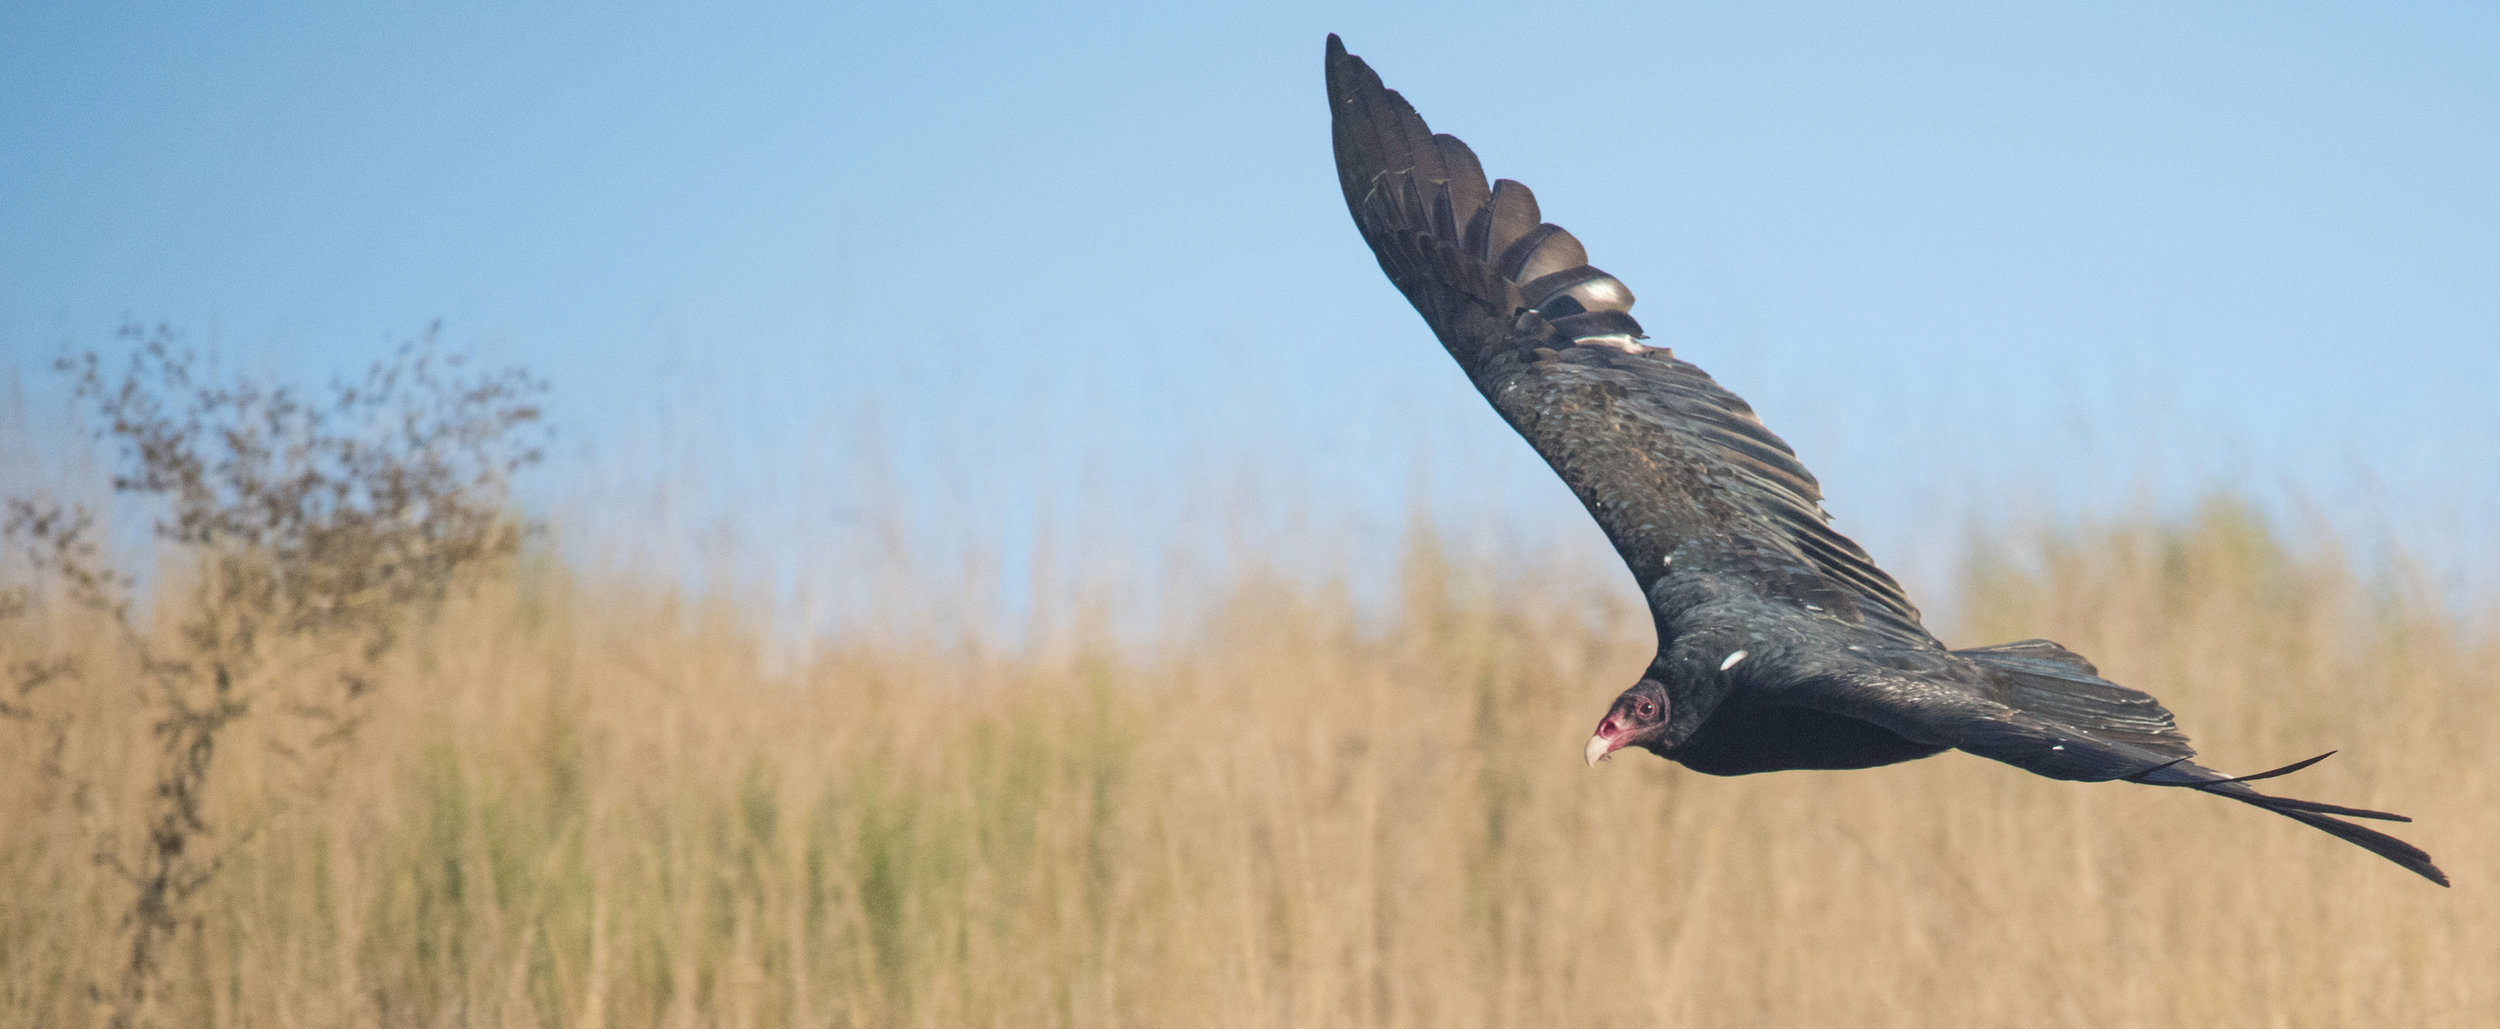 Turkey Vulture at Baylands Nature Preserve, Palo Alto, California